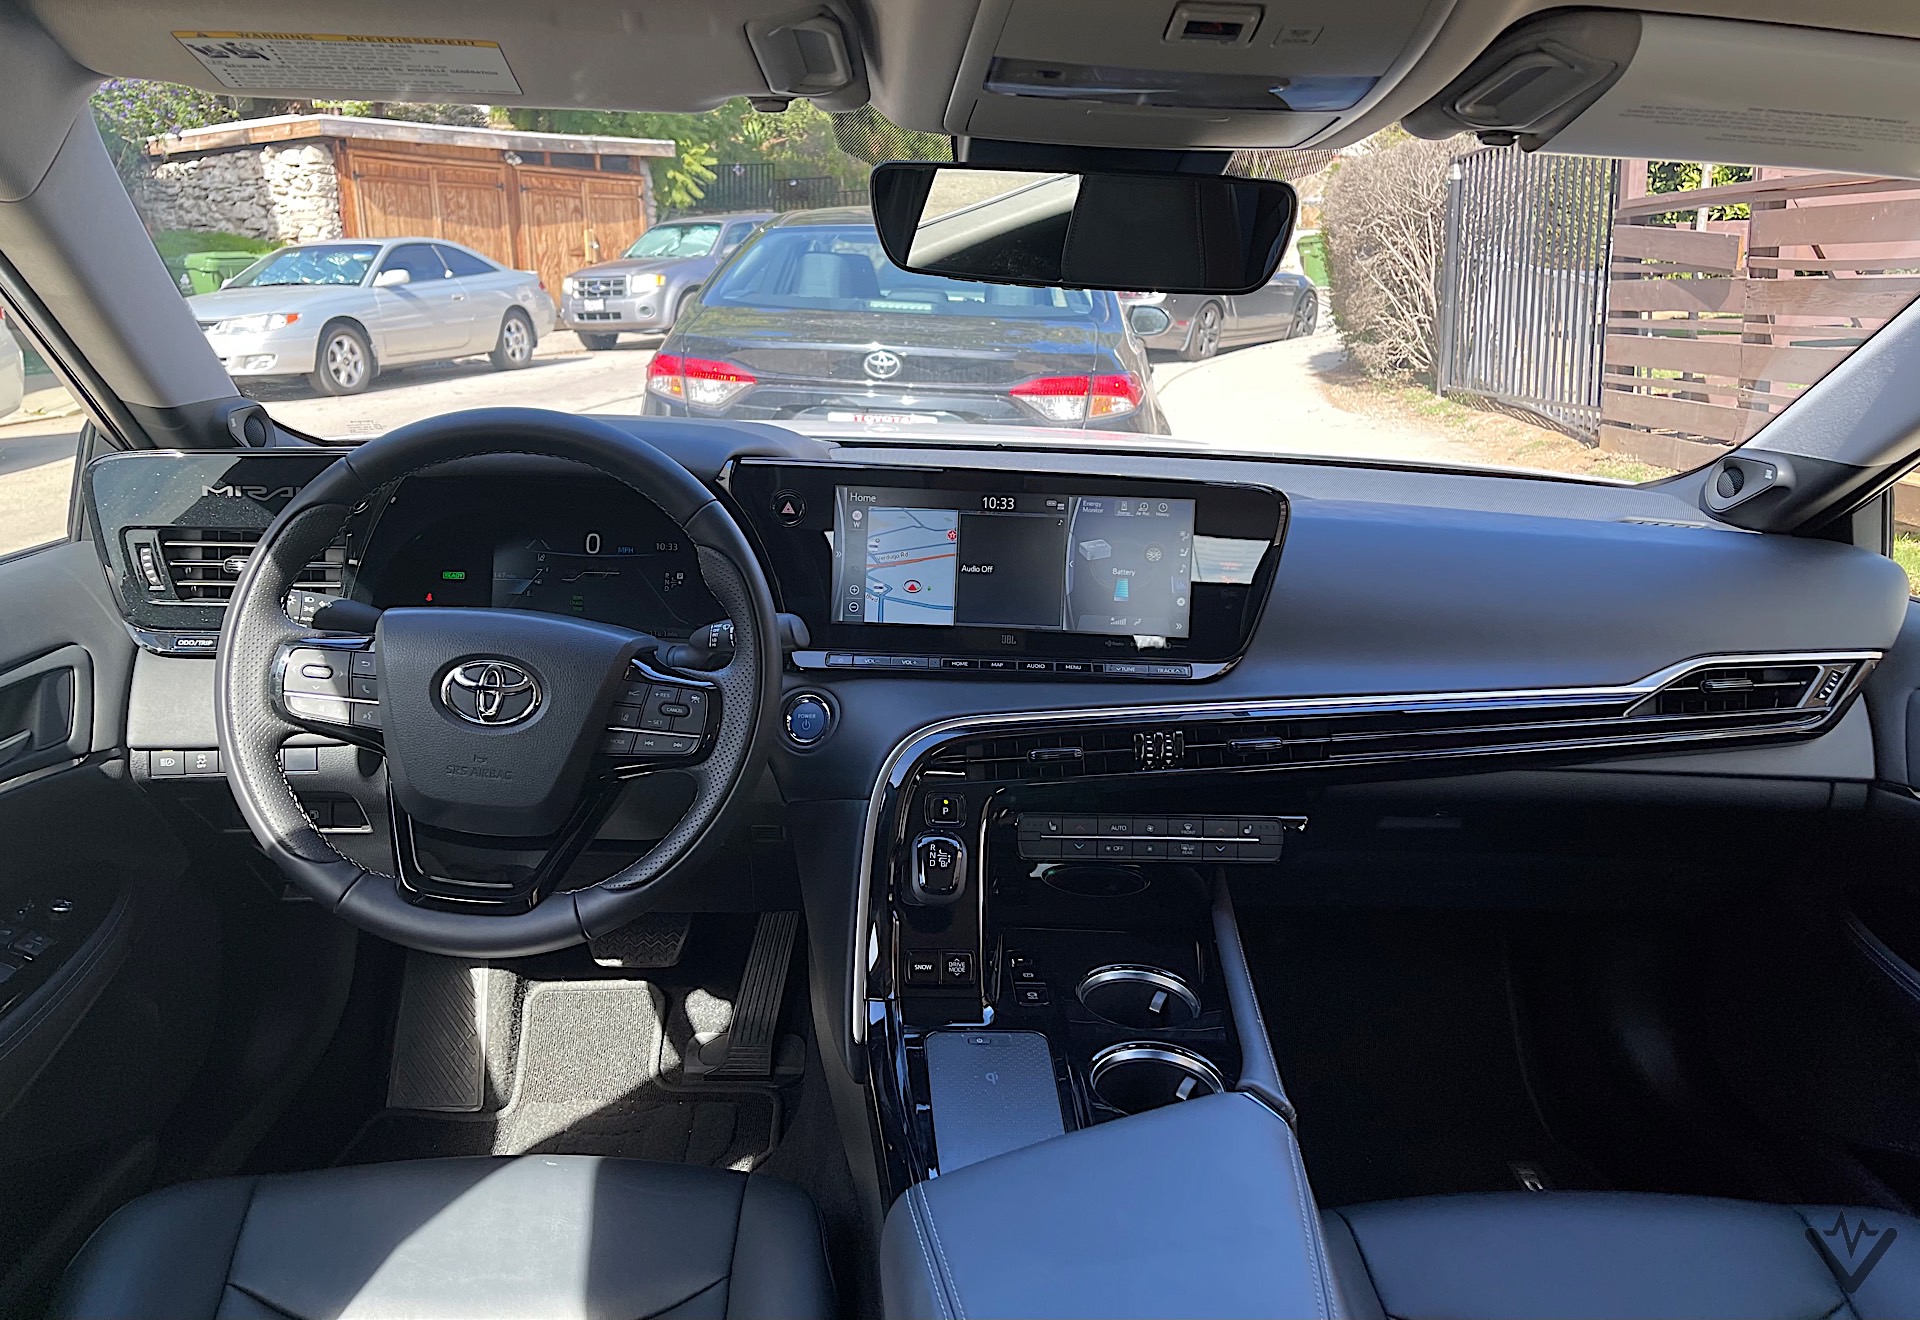 2021 Toyota Mirai XLE interior 05 1